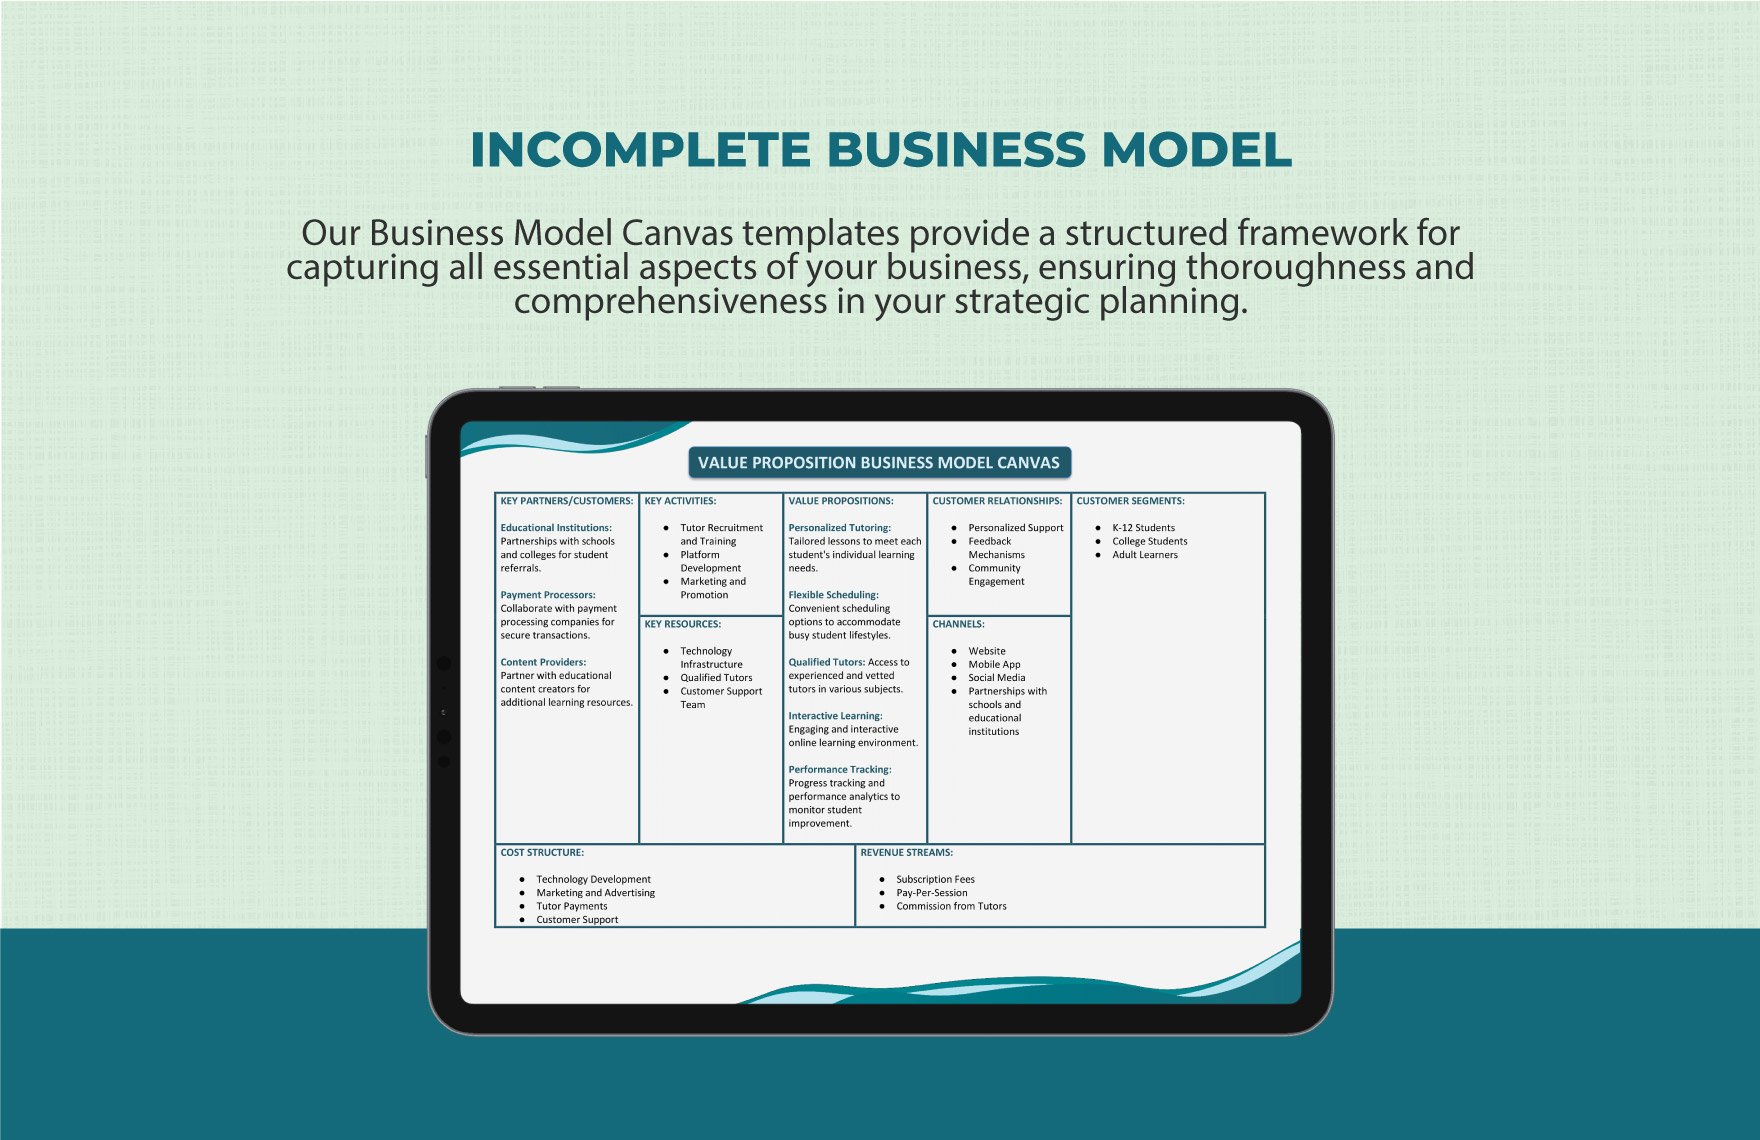 Value Proposition Business Model Canvas Template